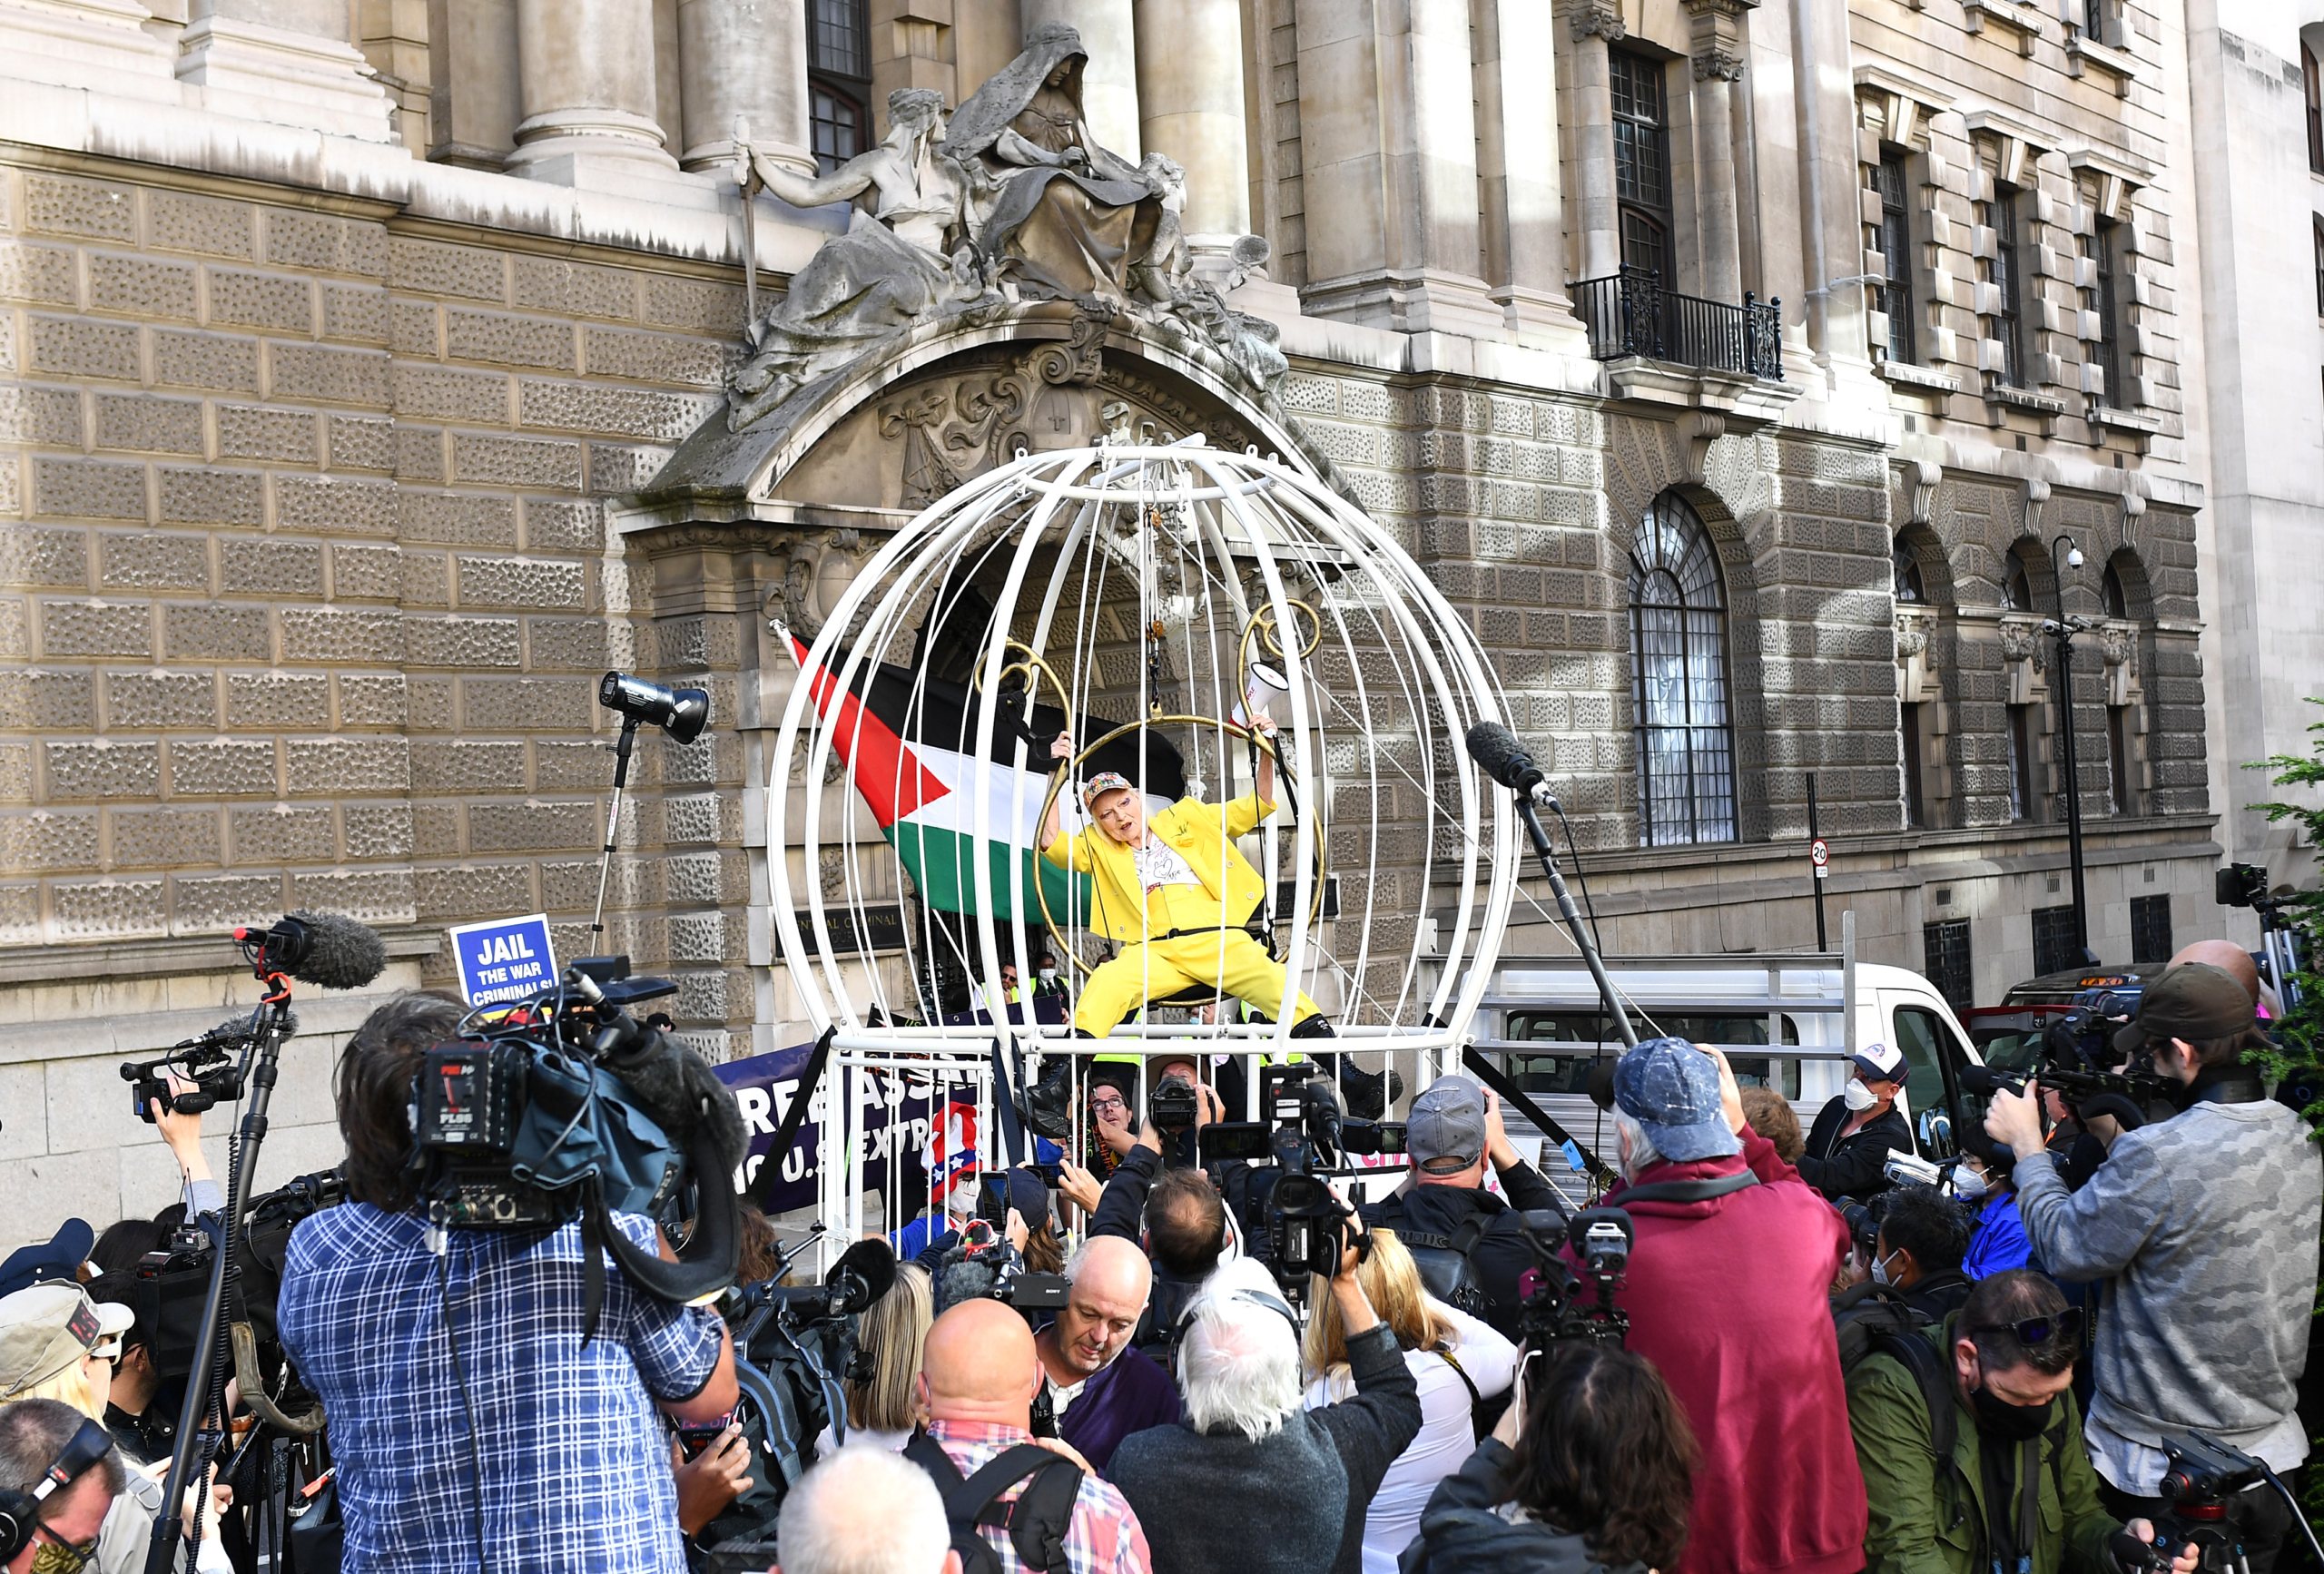 Dame Vivienne Westwood Suspends 10 Ft High Inside Giant Bird Cage In Protest For Julian Assange